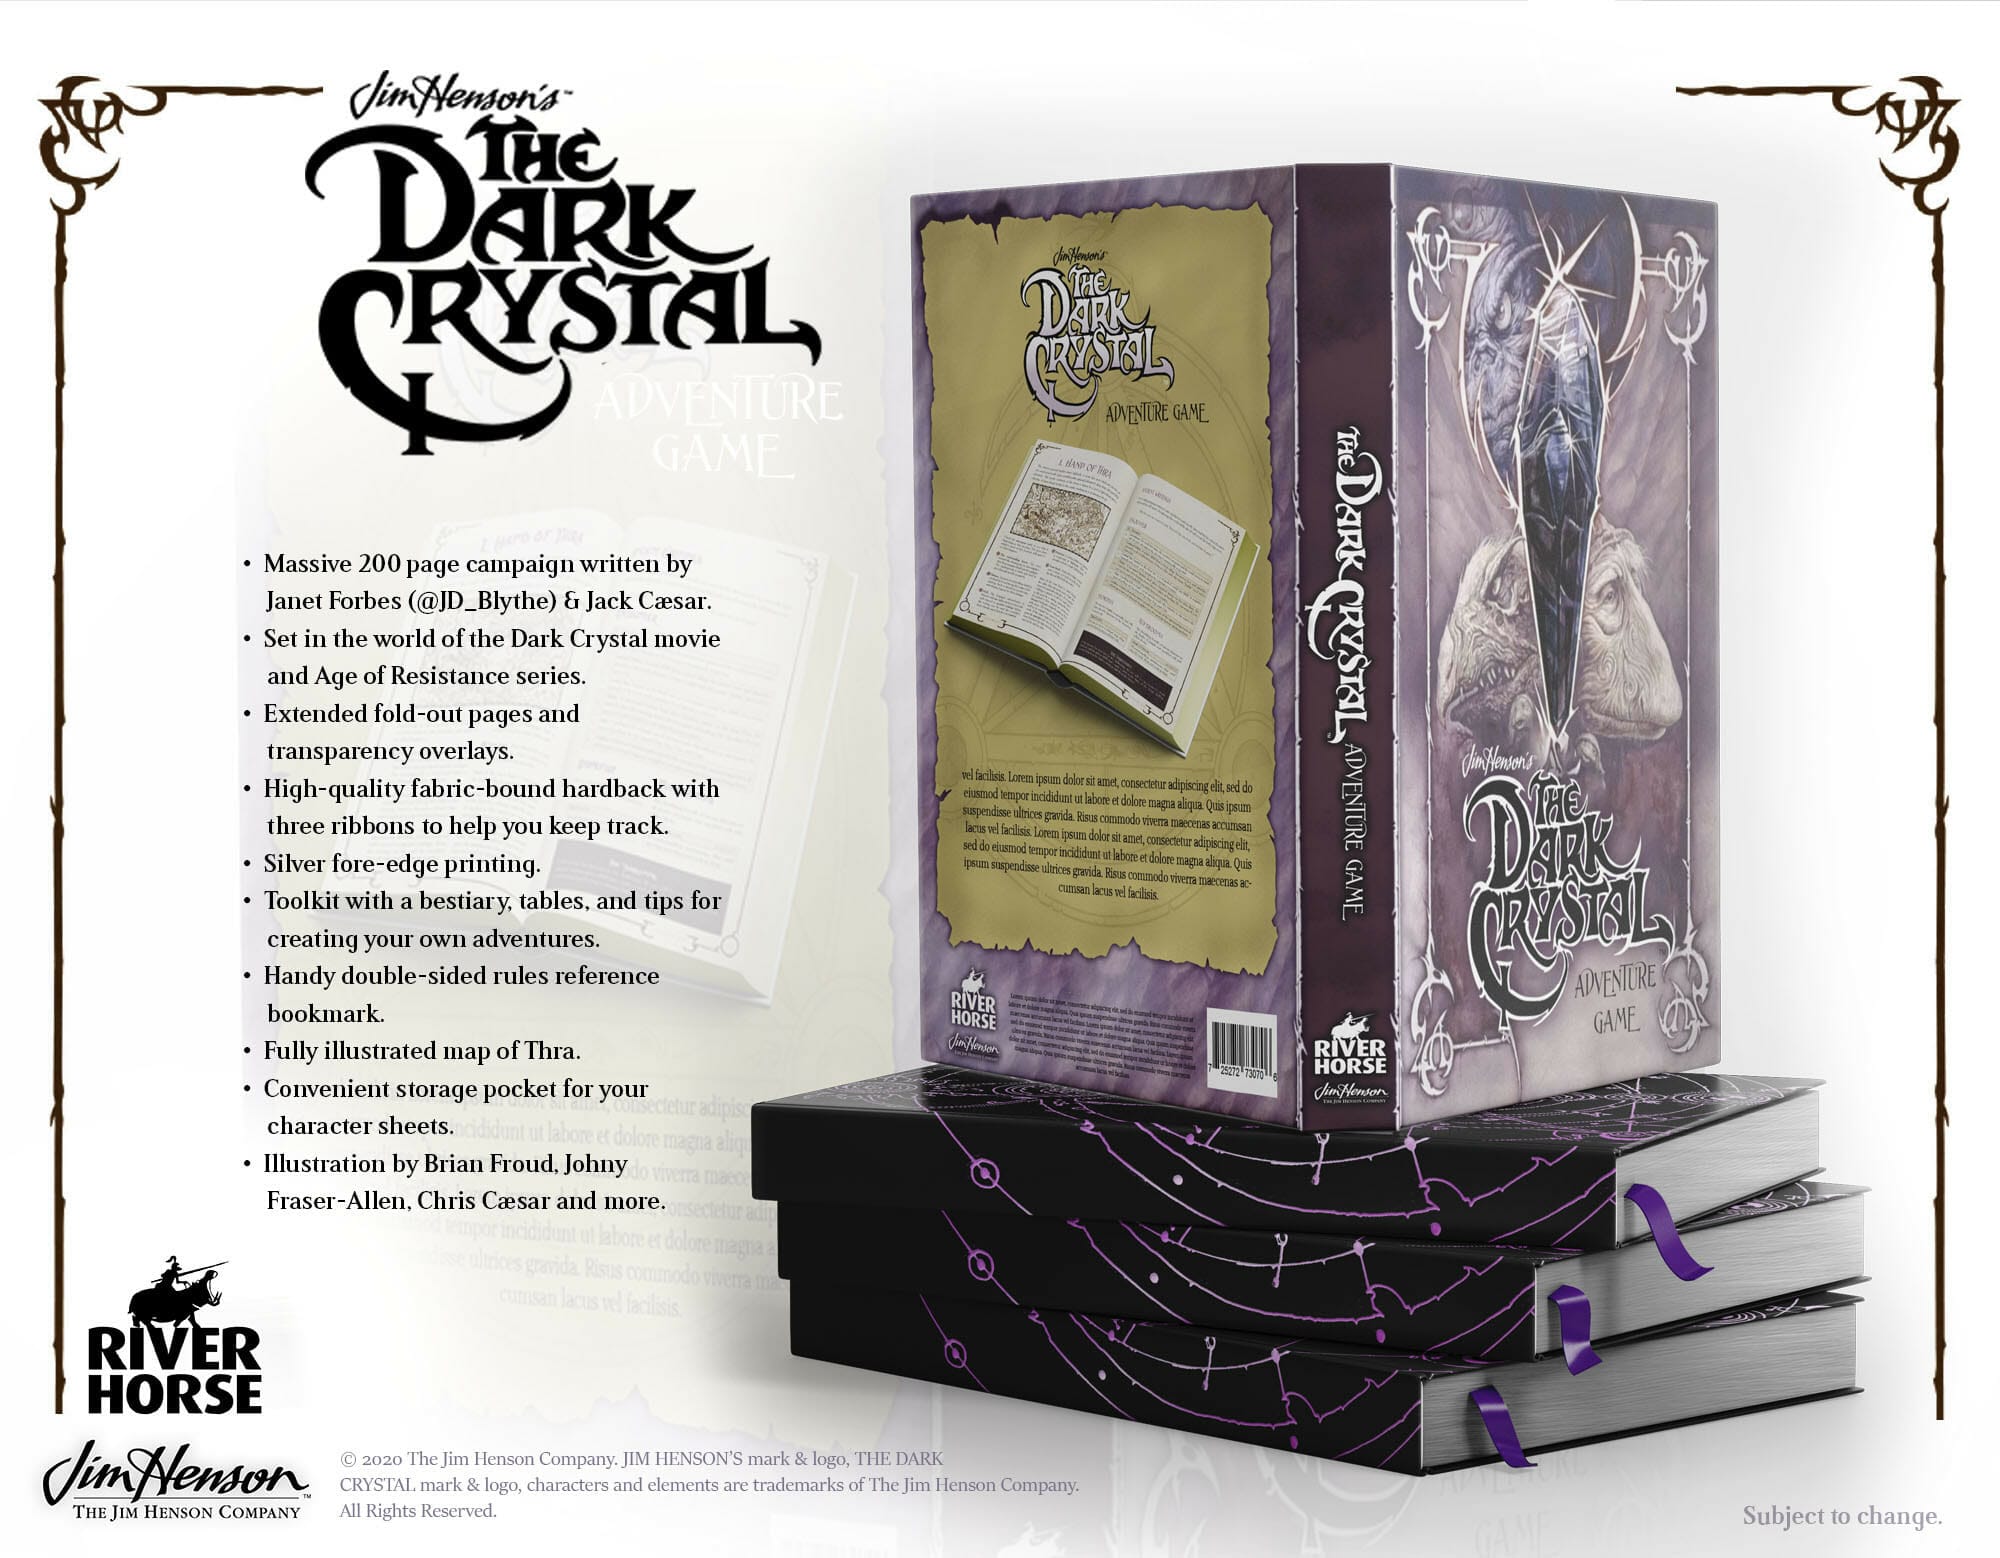 The Dark Crystal Adventure Game